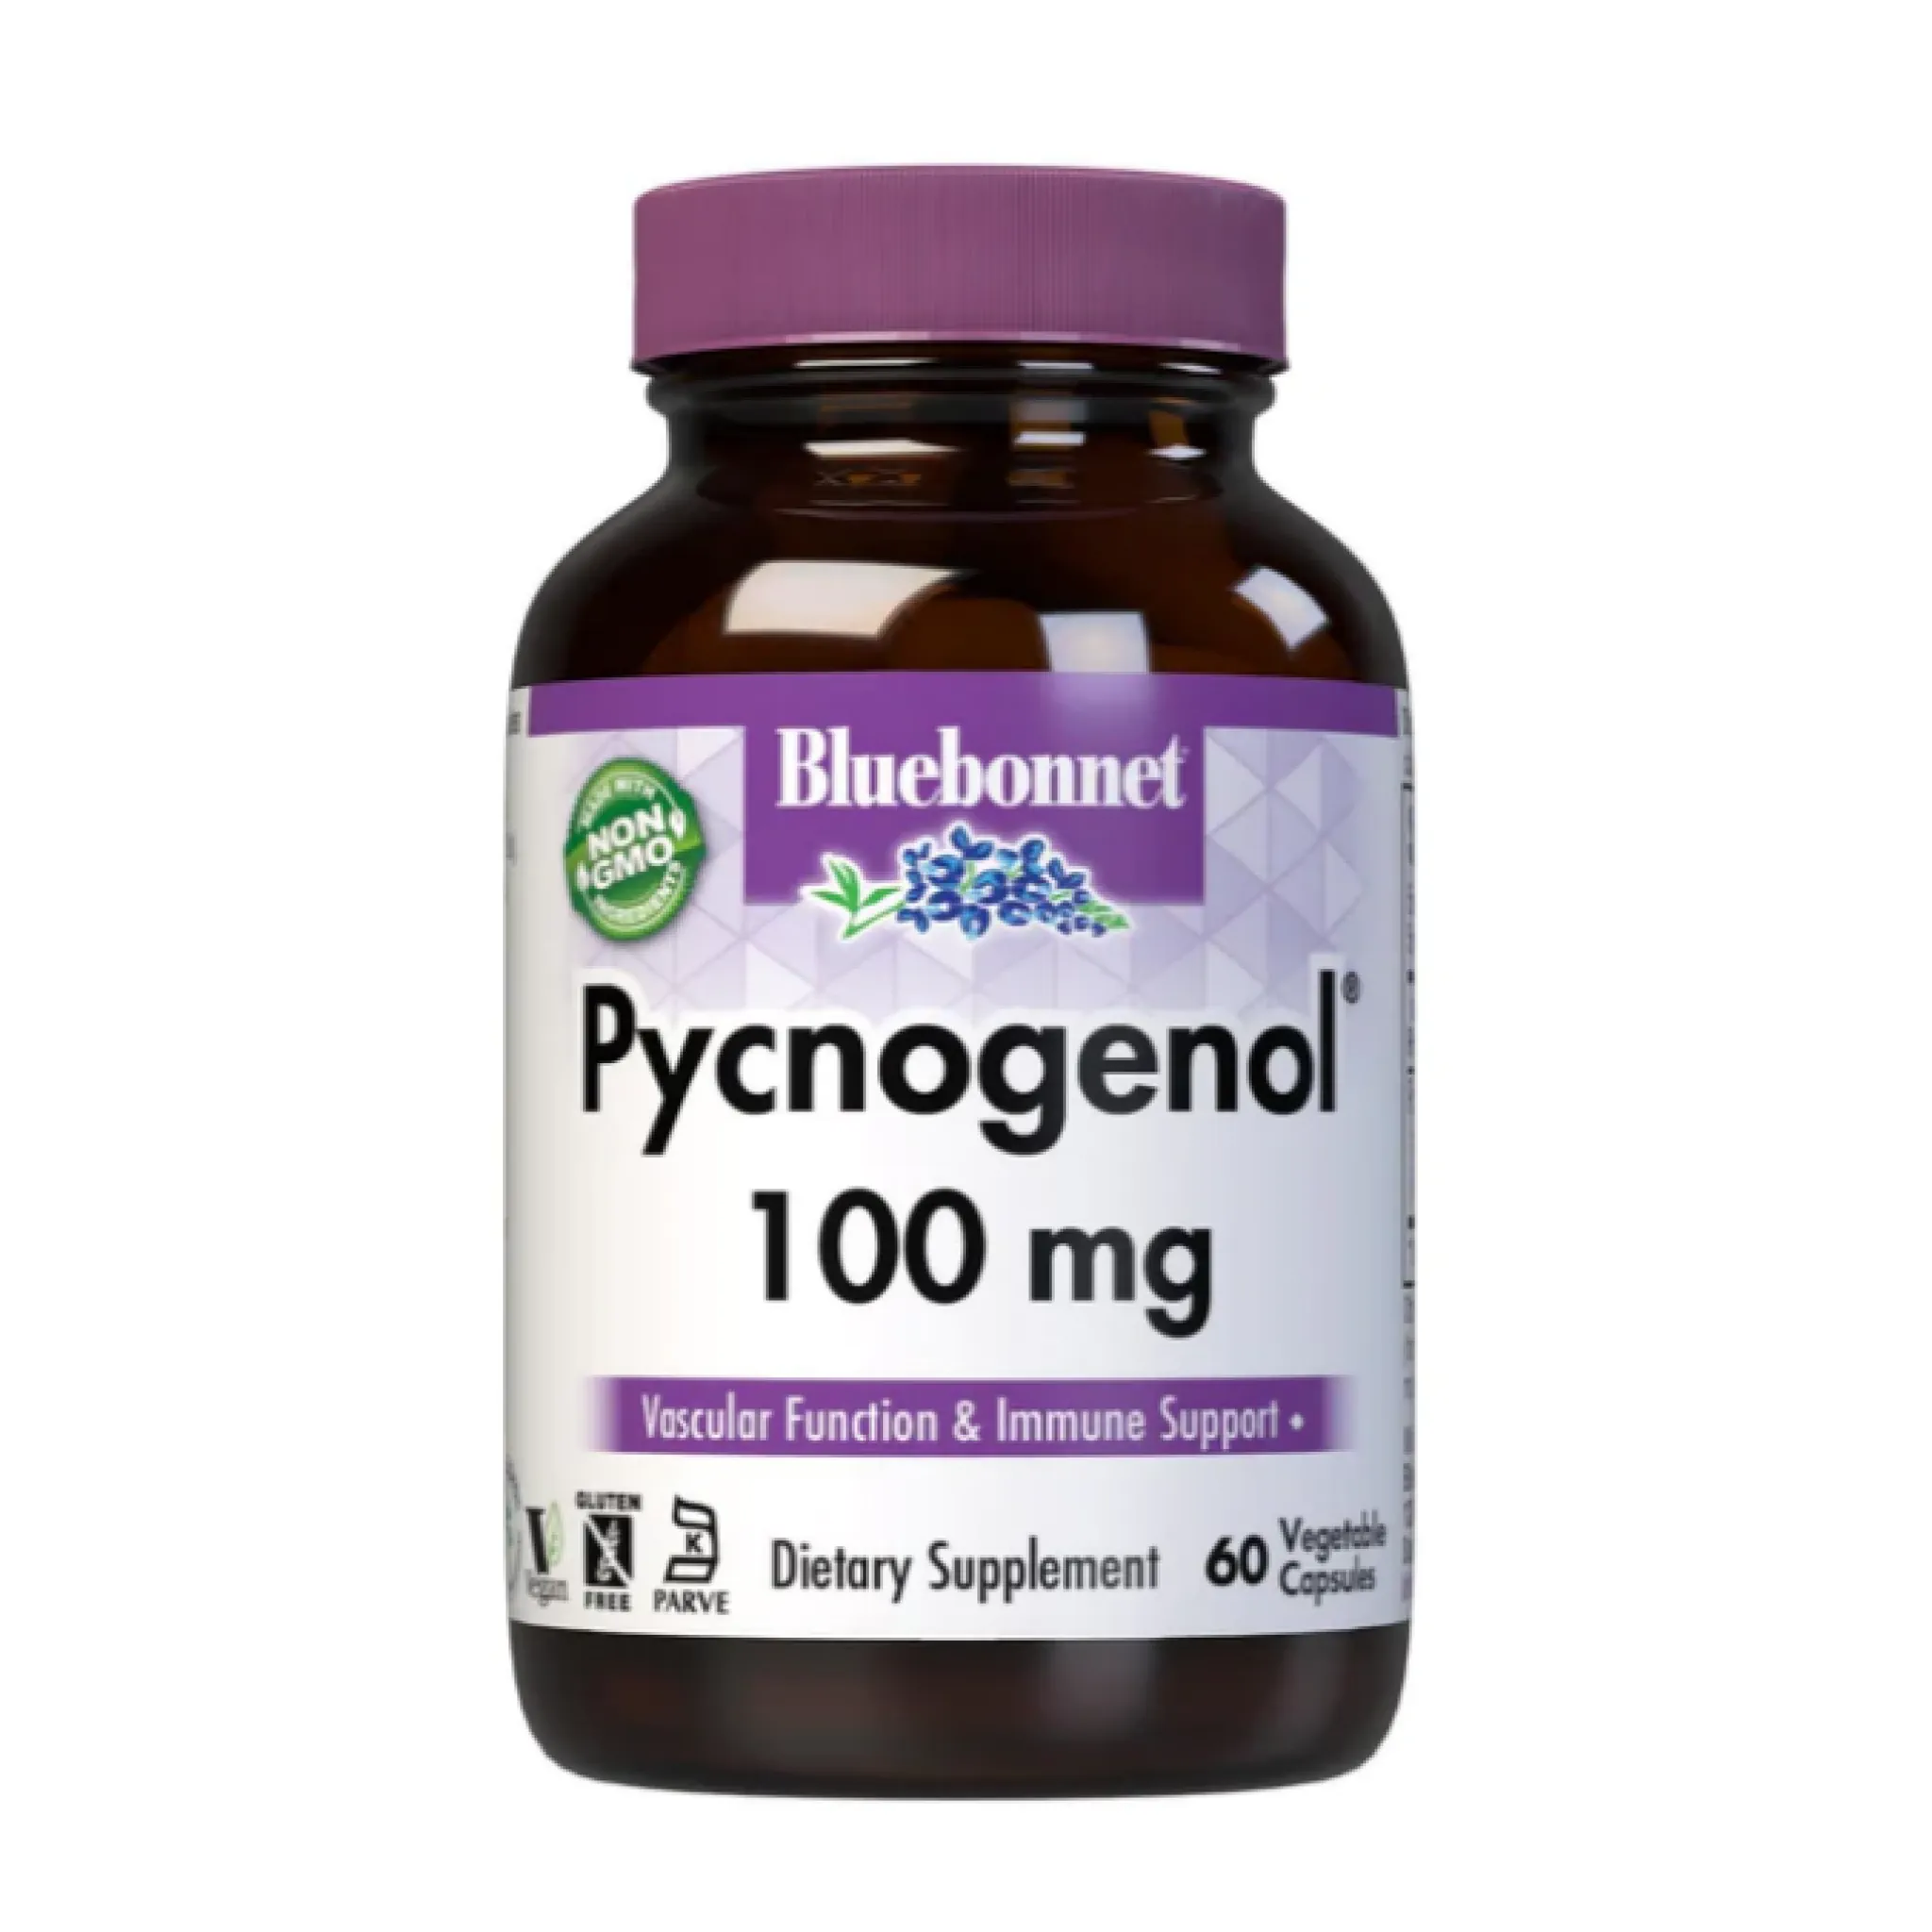 Bluebonnet - Pycnogenol 100 mg